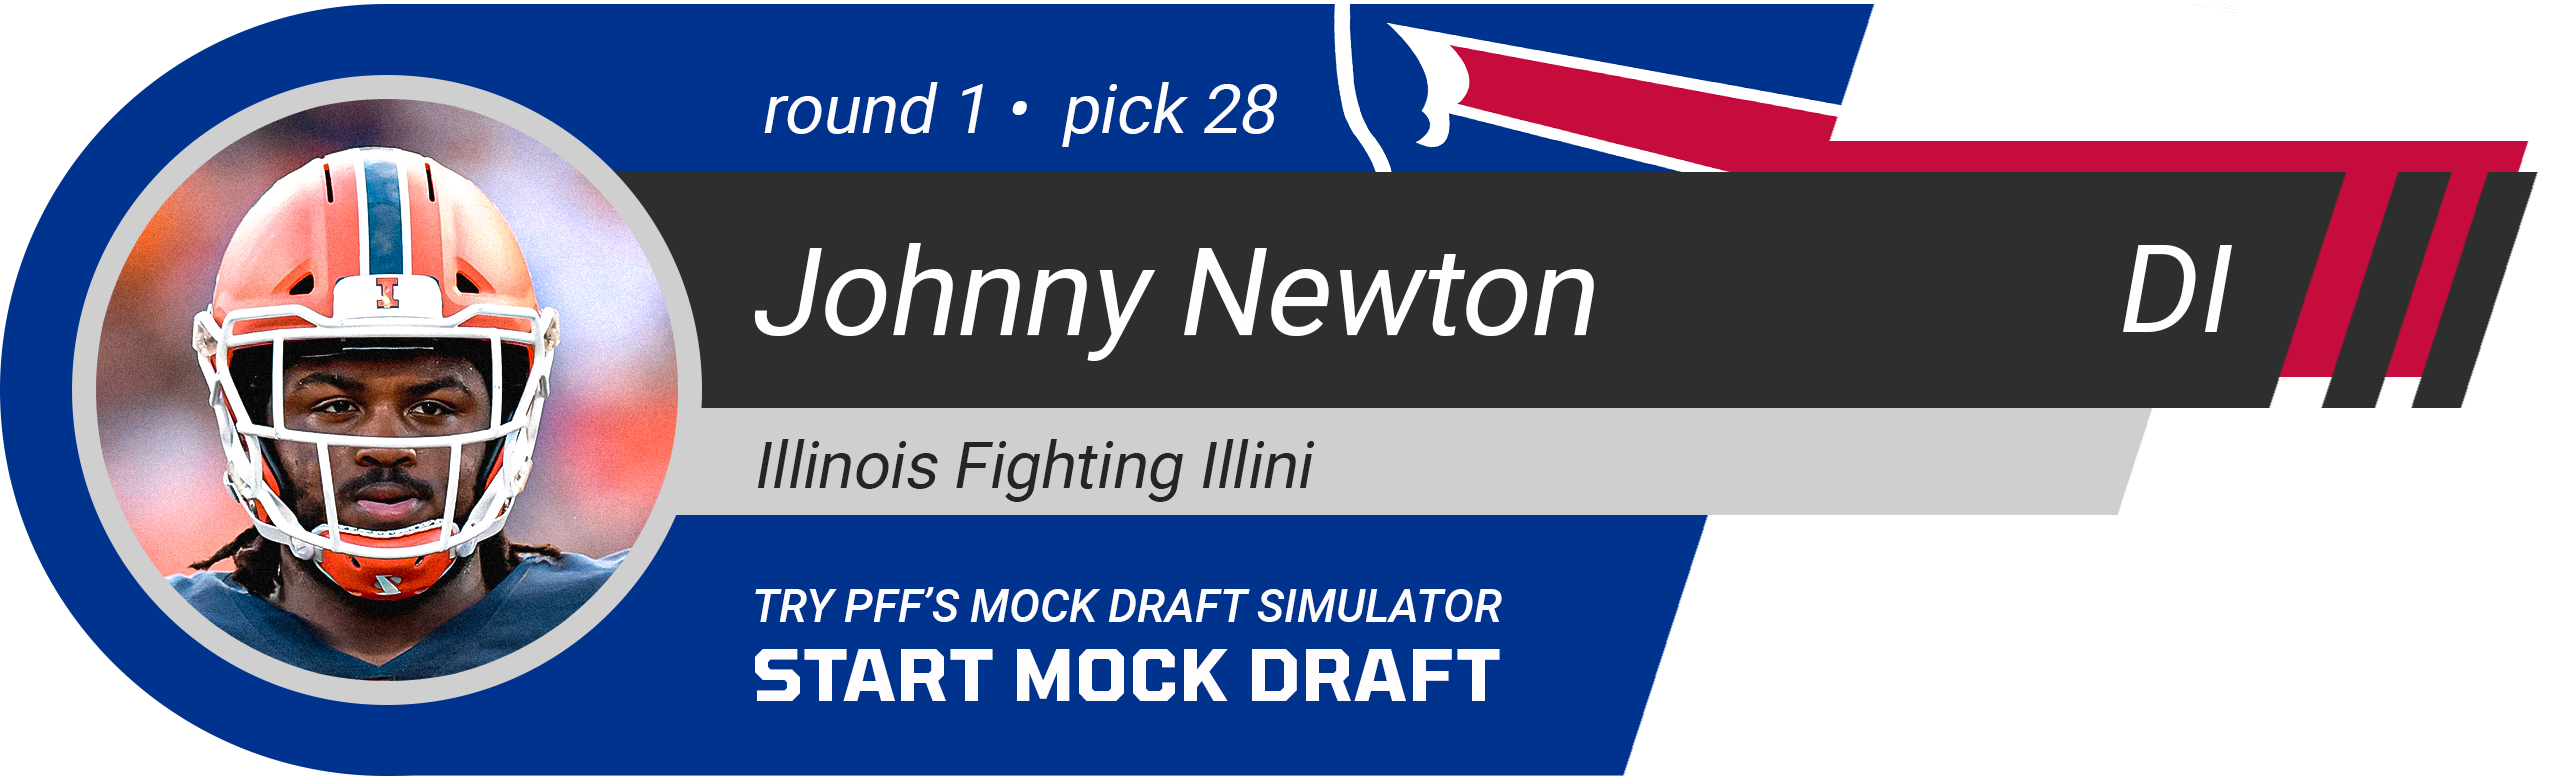 28. Buffalo Bills: DI Johnny Newton, Illinois